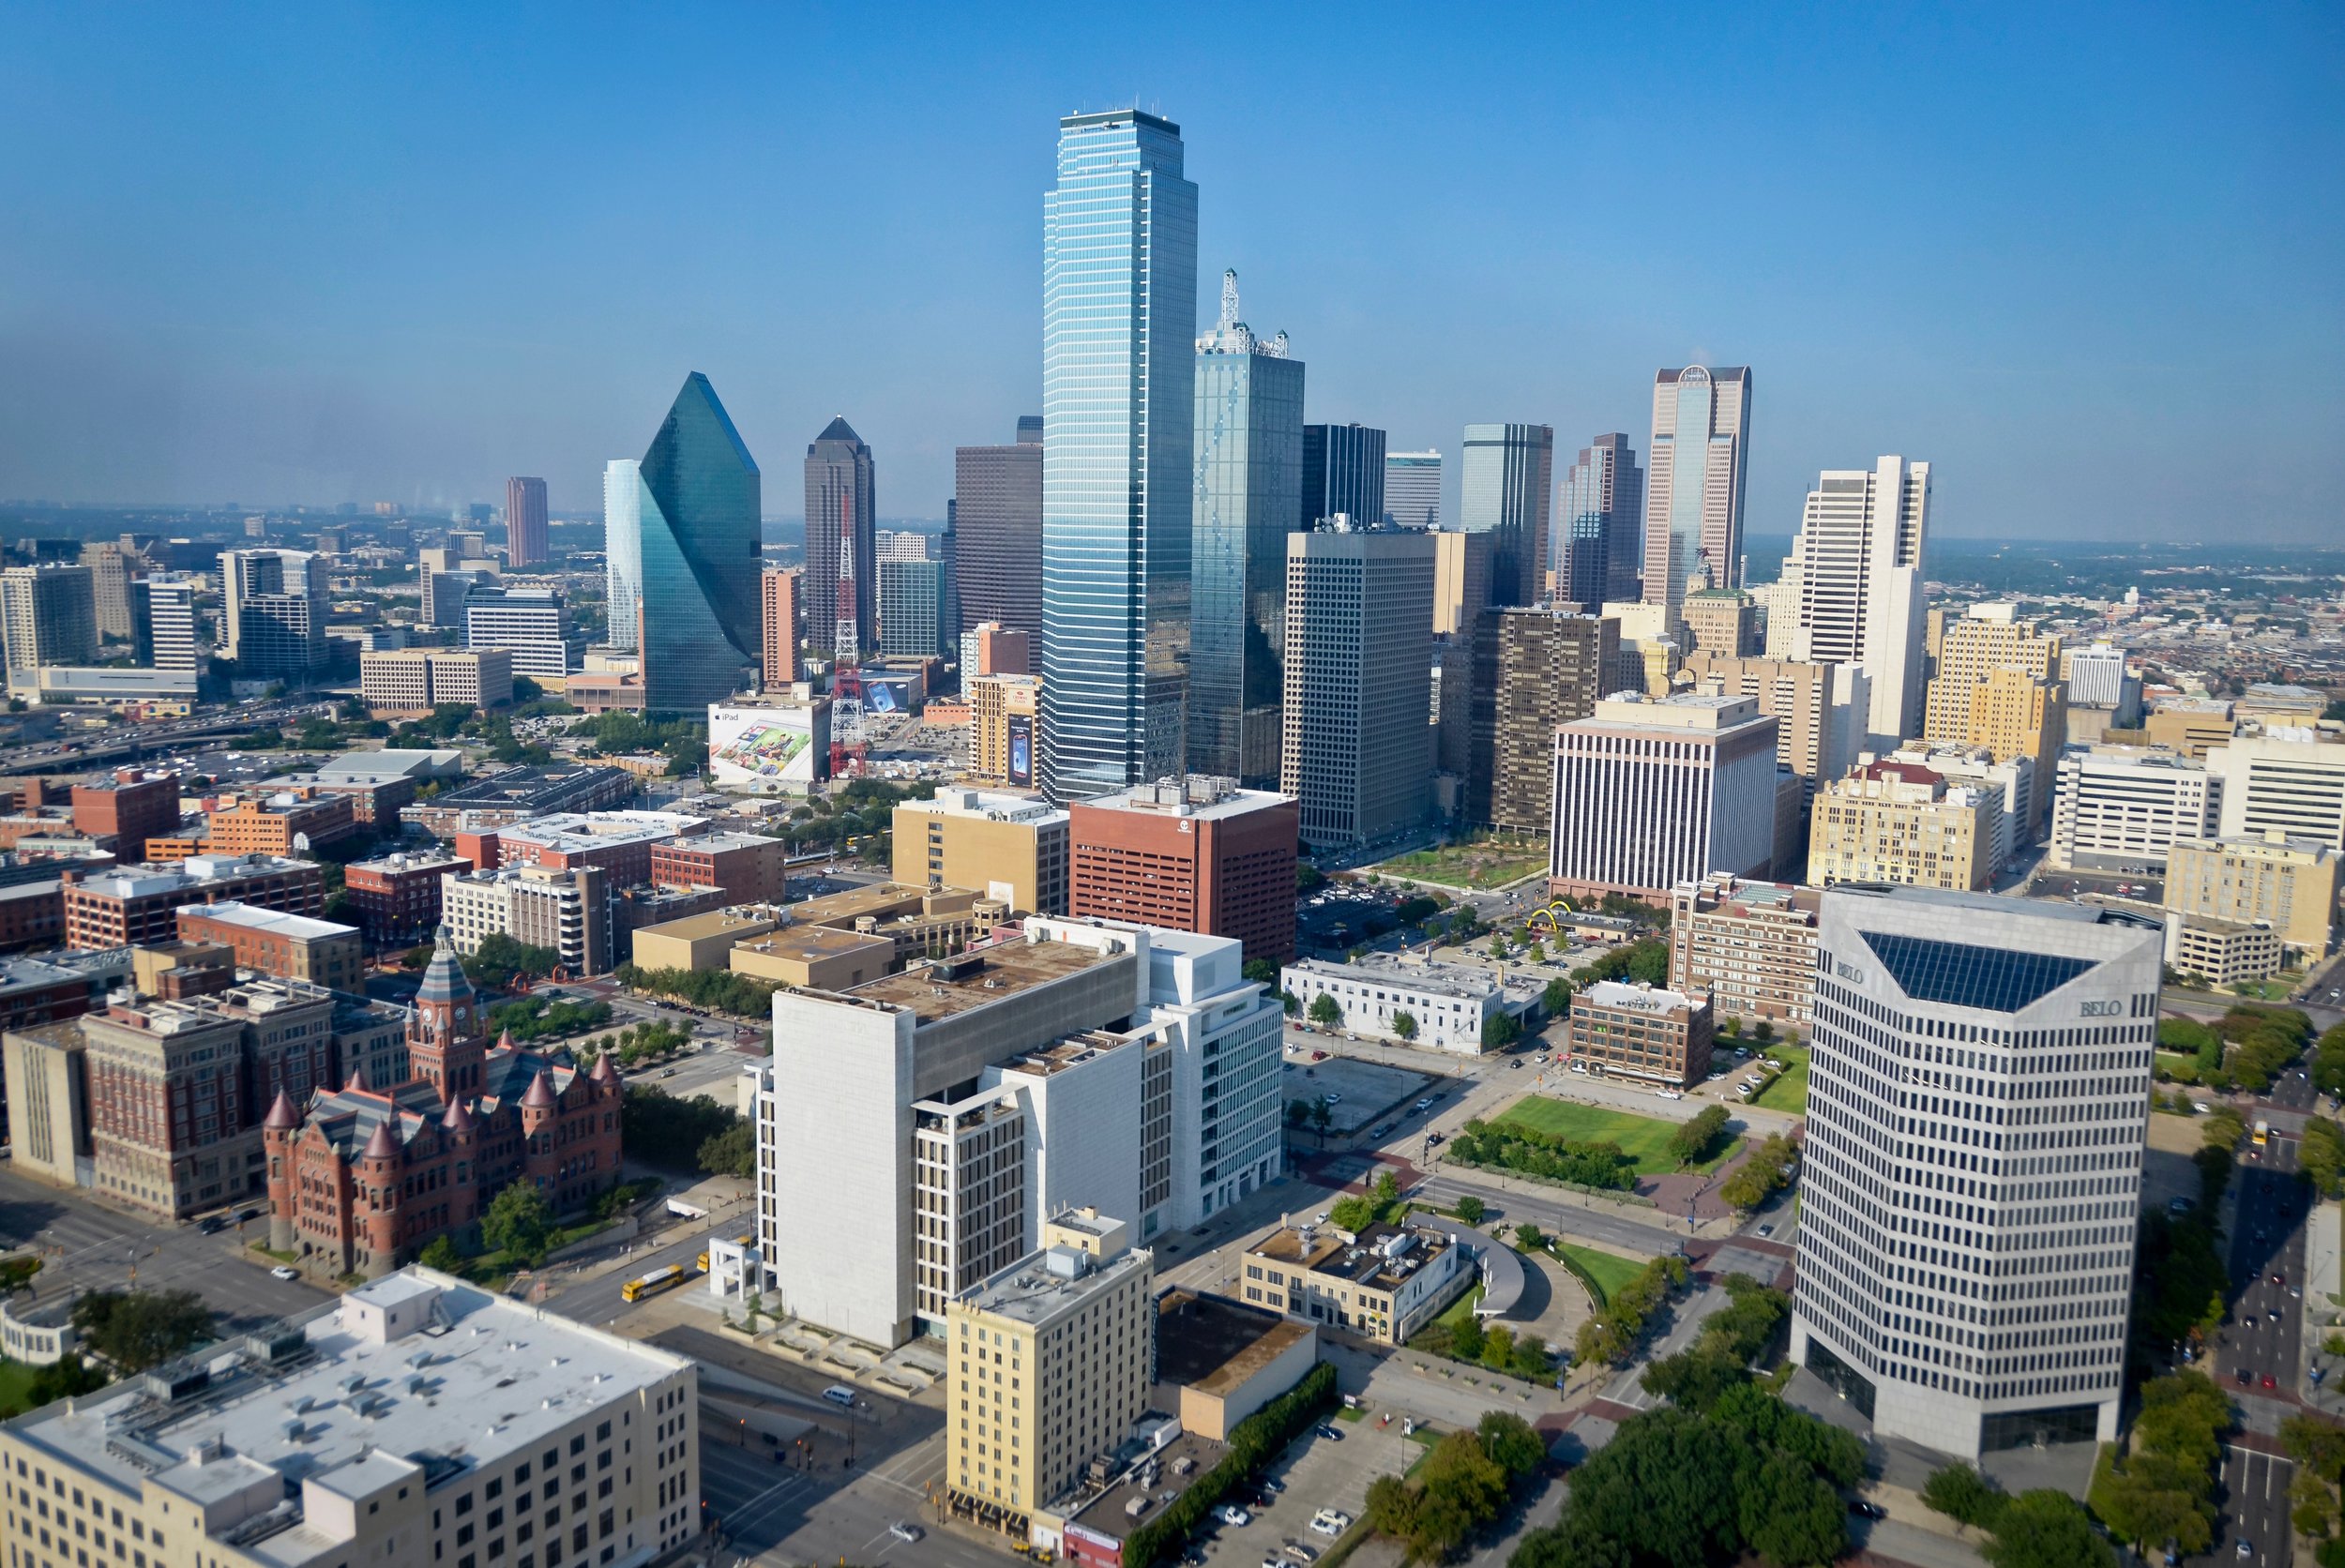 HopSkipDrive brings safe youth transportation to Dallas-Fort Worth